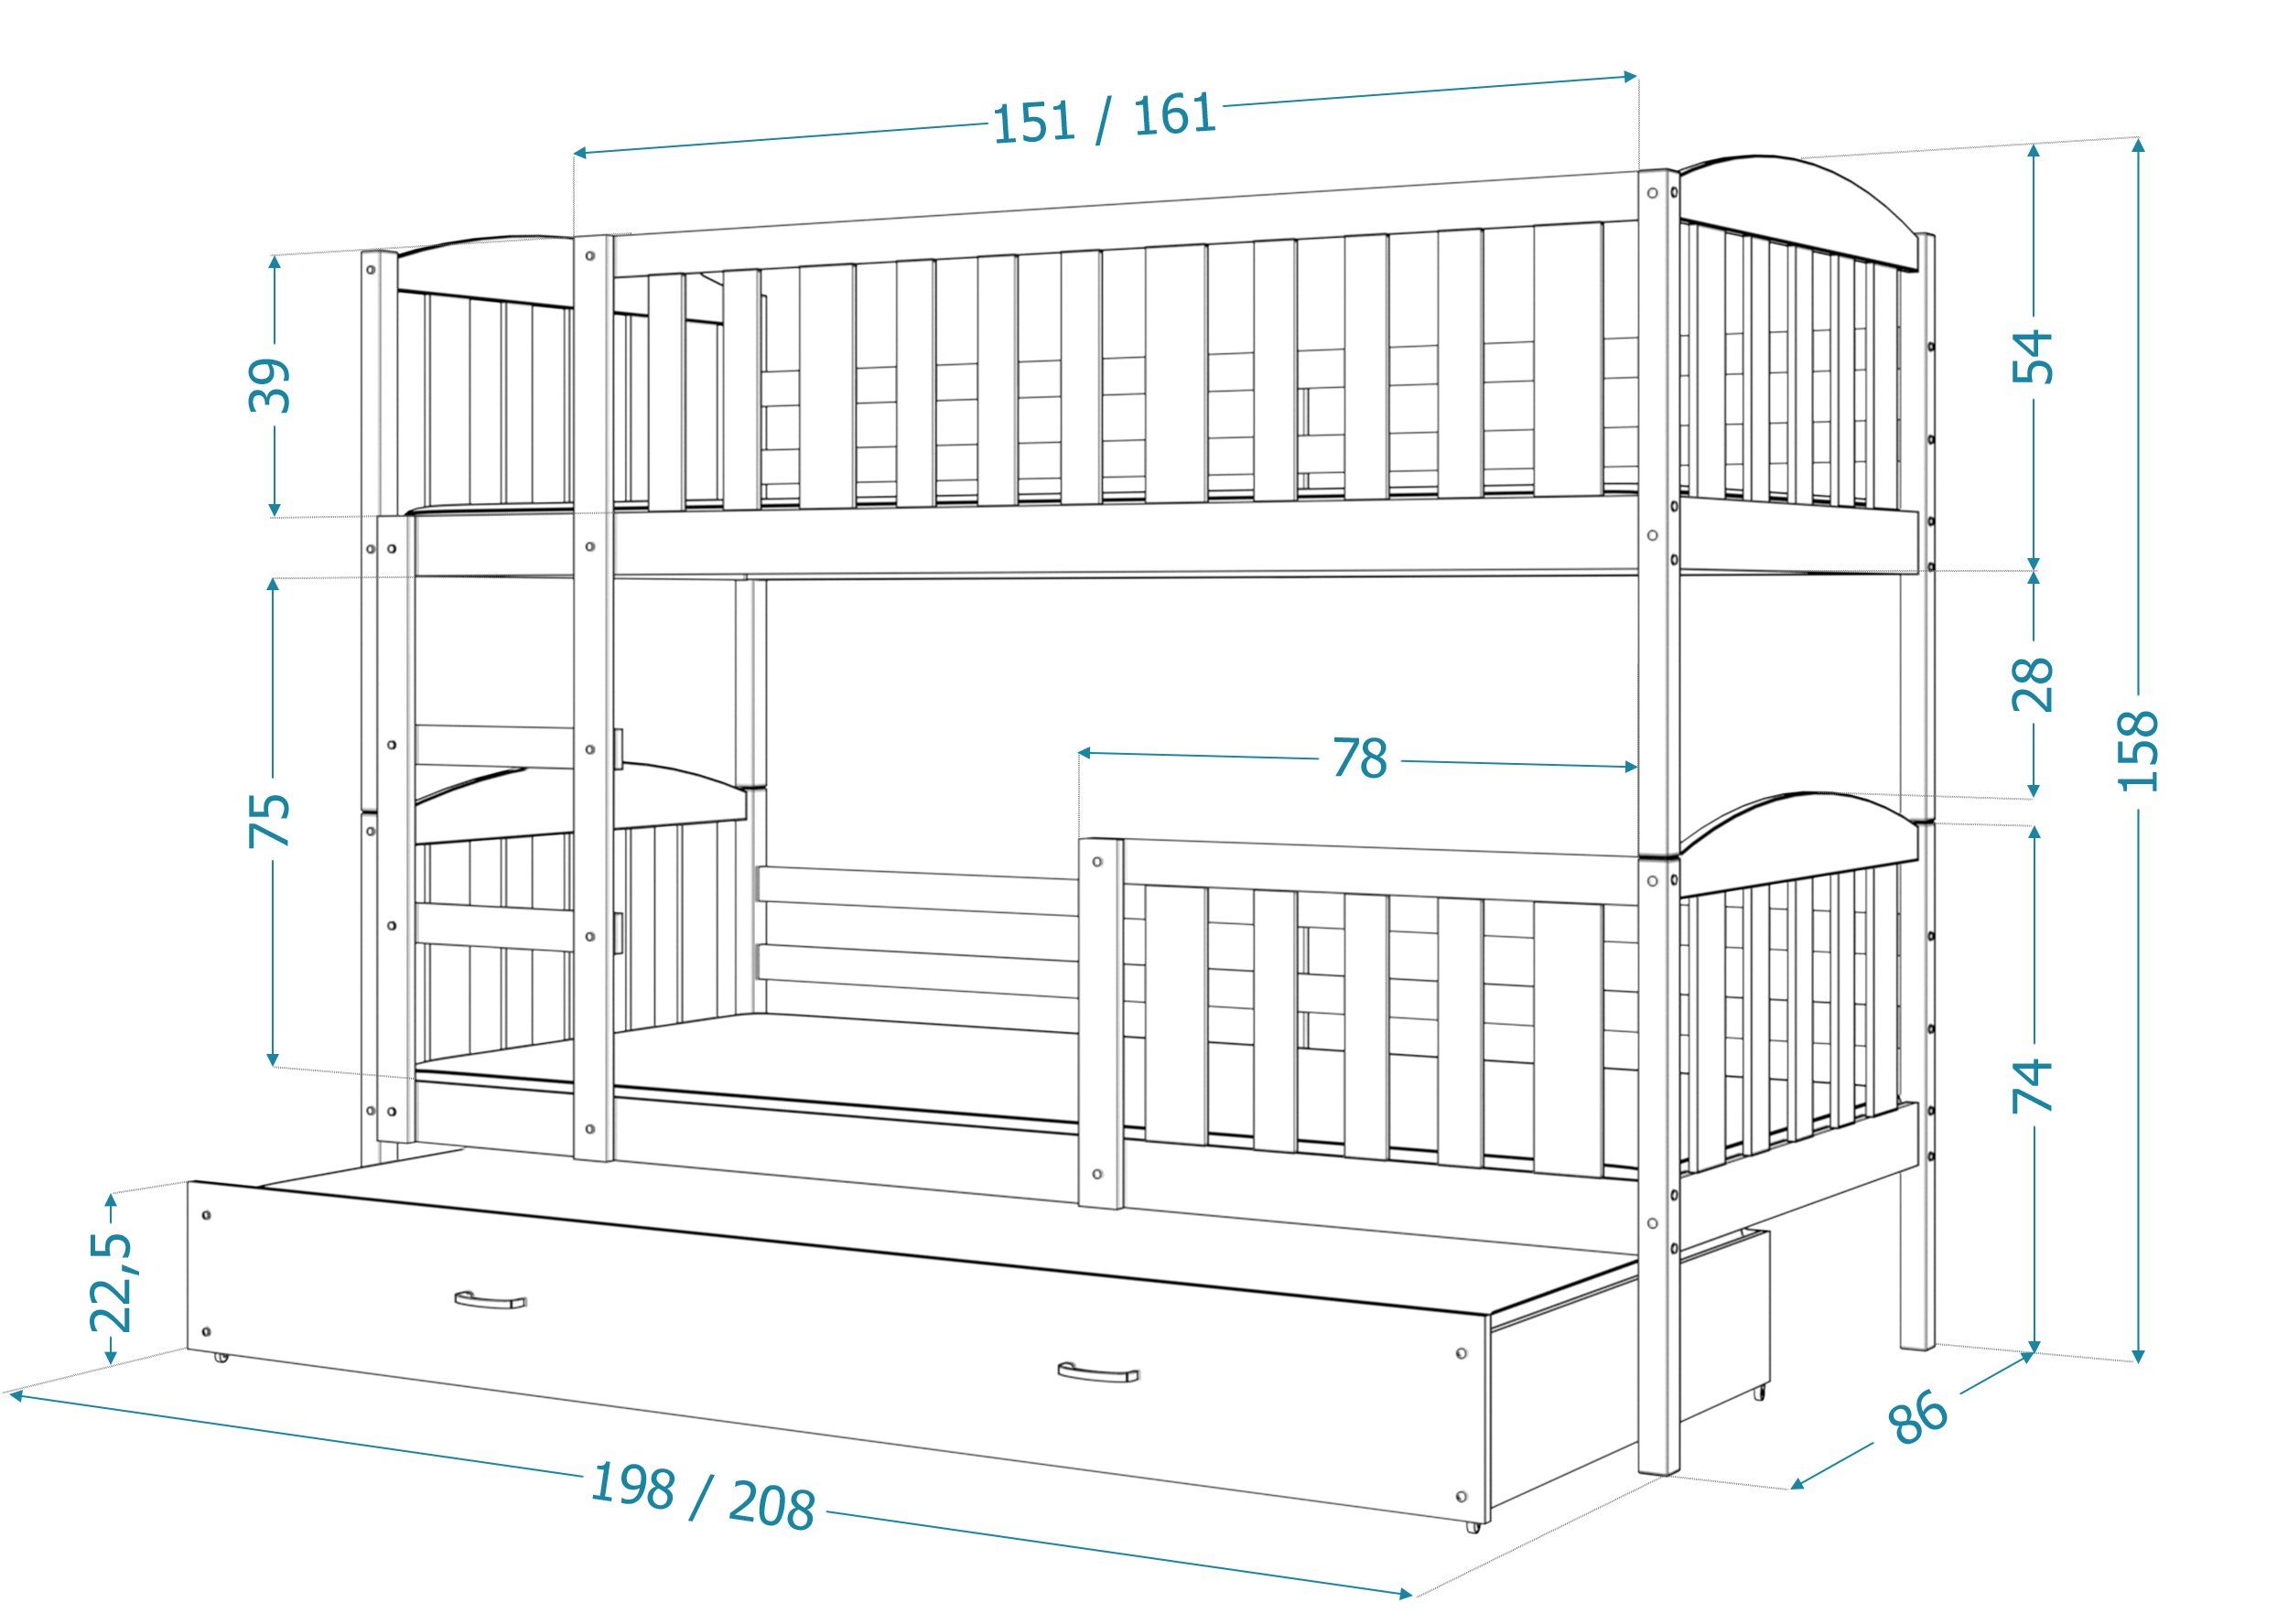 Siblo Kinderbett Rupert (Flexibler Weiß Bett Massivholz, Sicherheitsbarriere, Möbelplatte Schaummatratzen), Schublade, Lattenrost